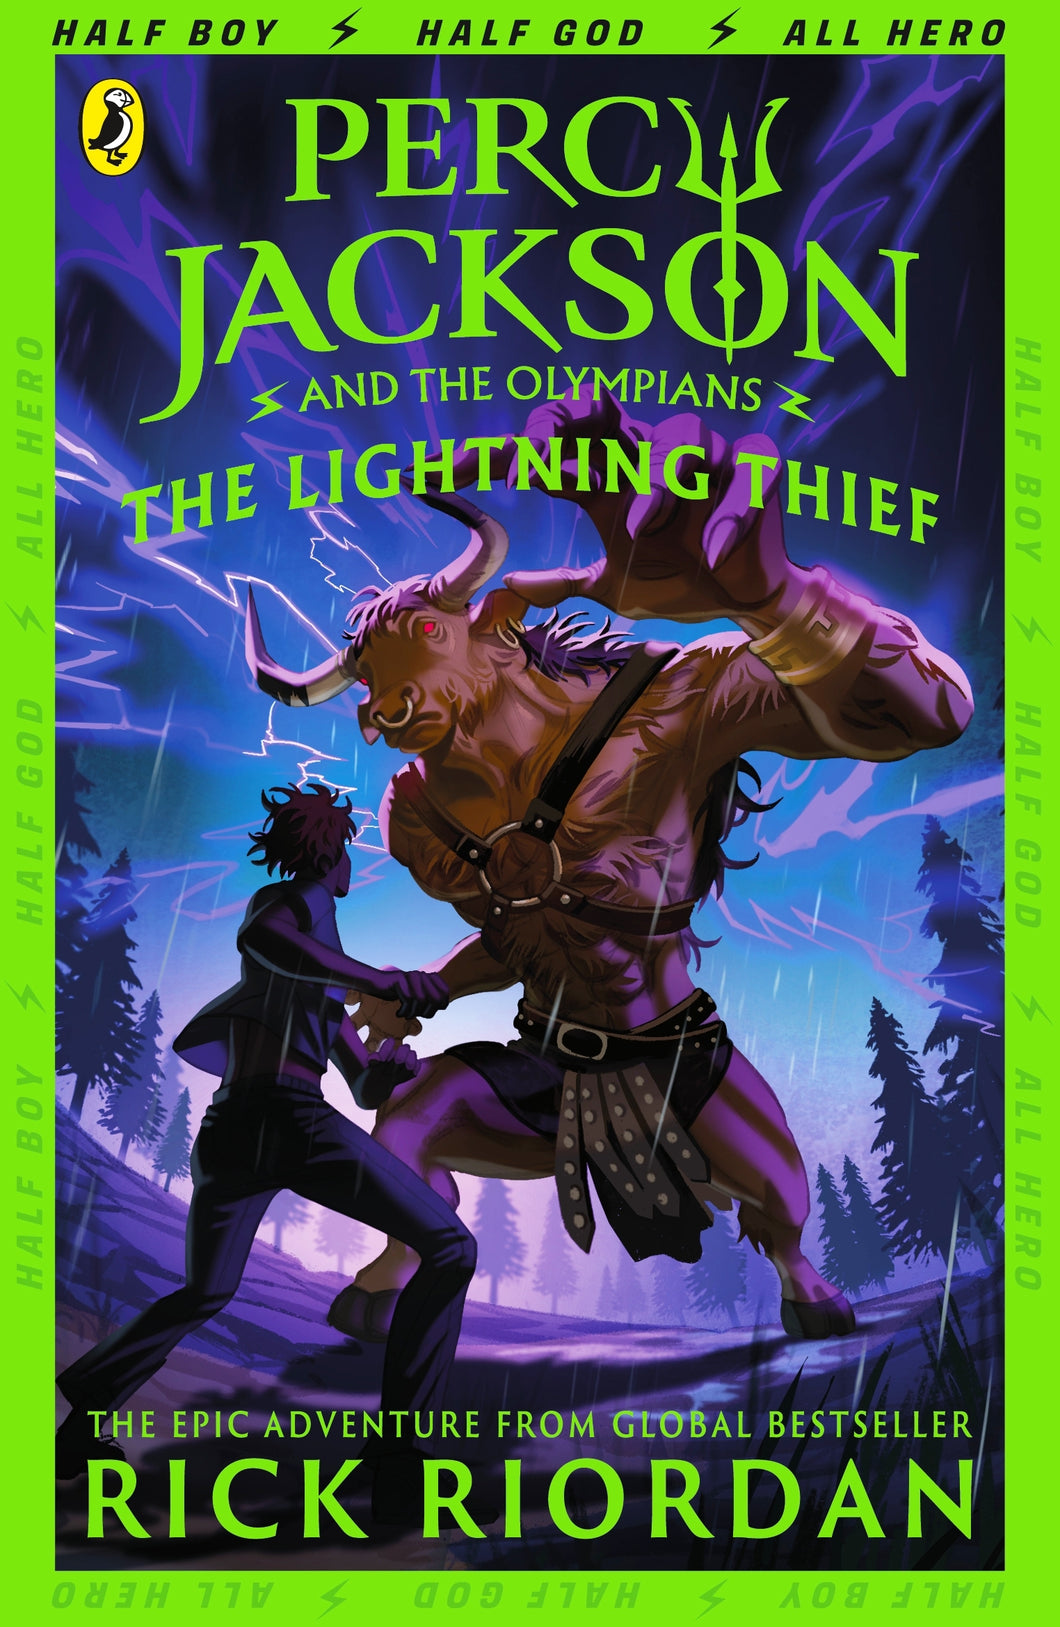 Percy Jackson and the Lightning Thief (#1) by Rick Riordan